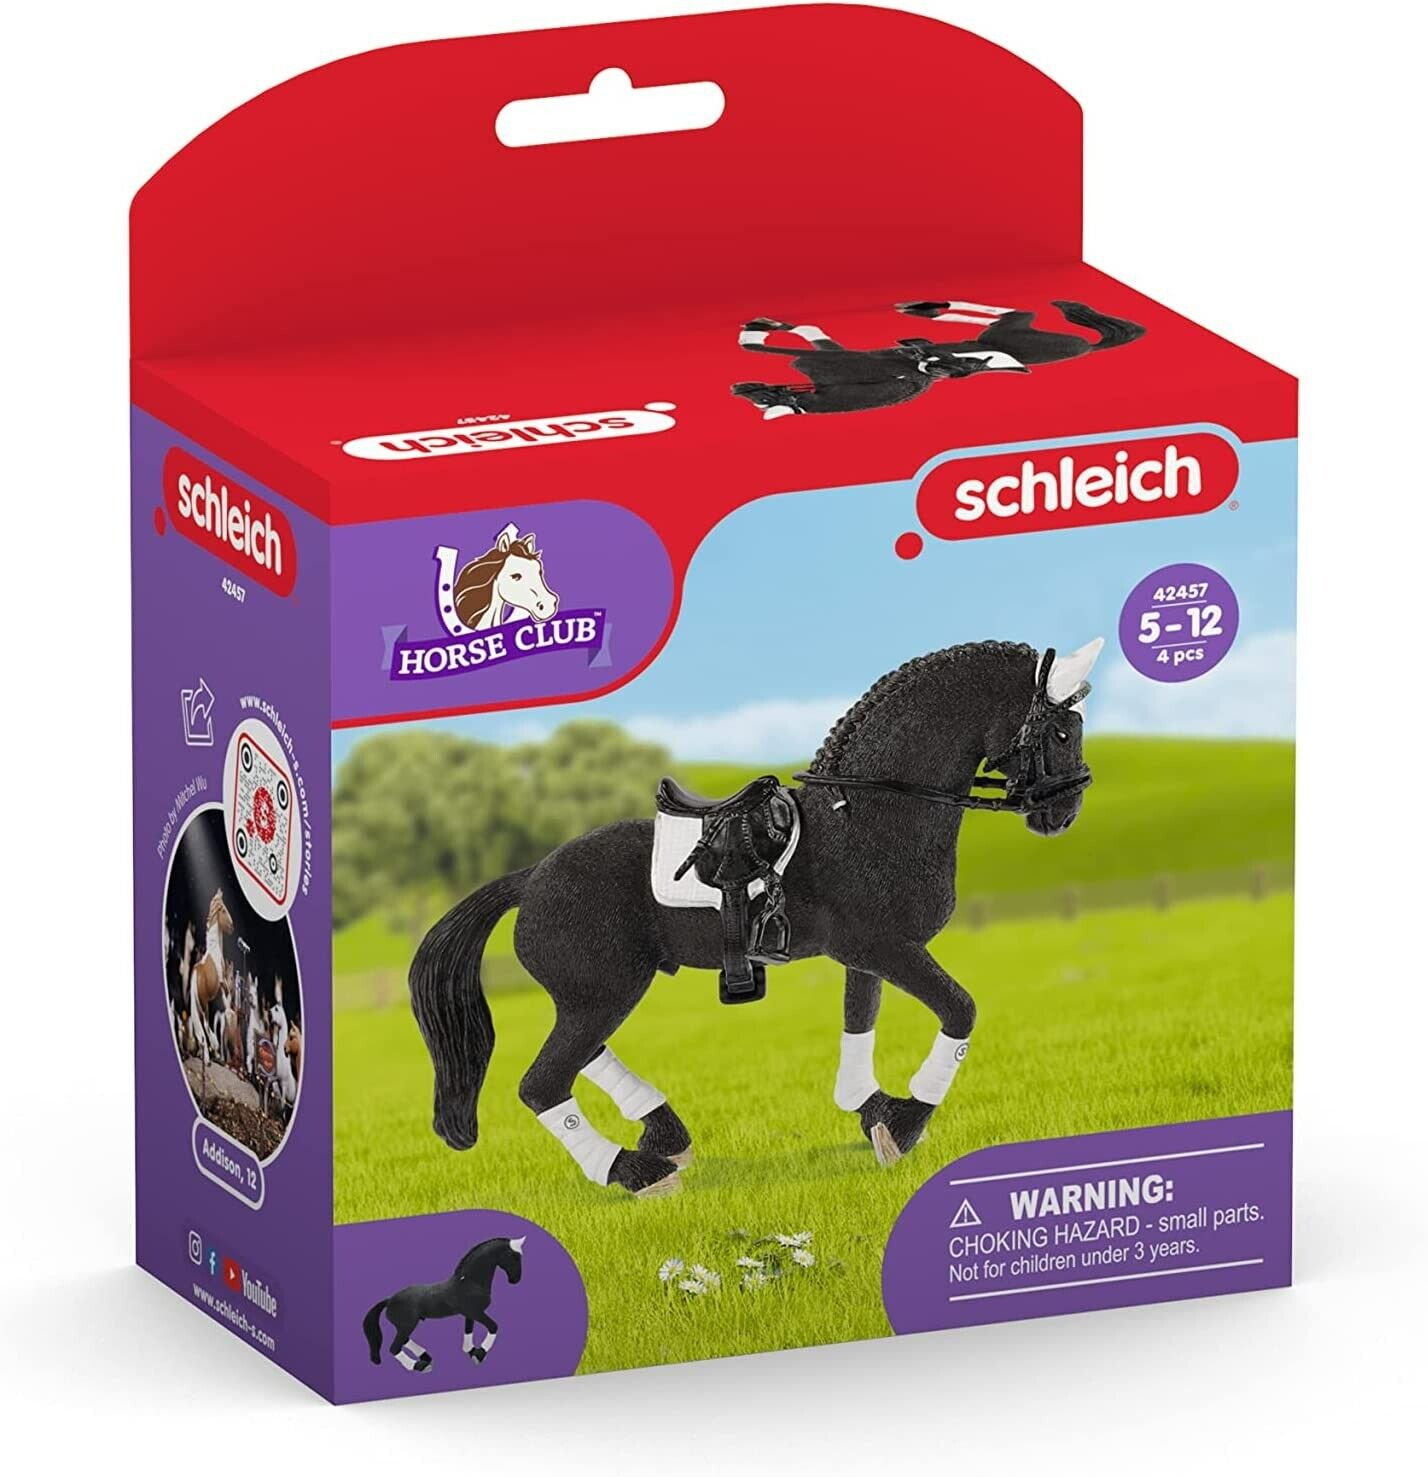 Schleich Horse Club FRISIAN Stallion Riding Tournament, #42457, NEW IN BOX